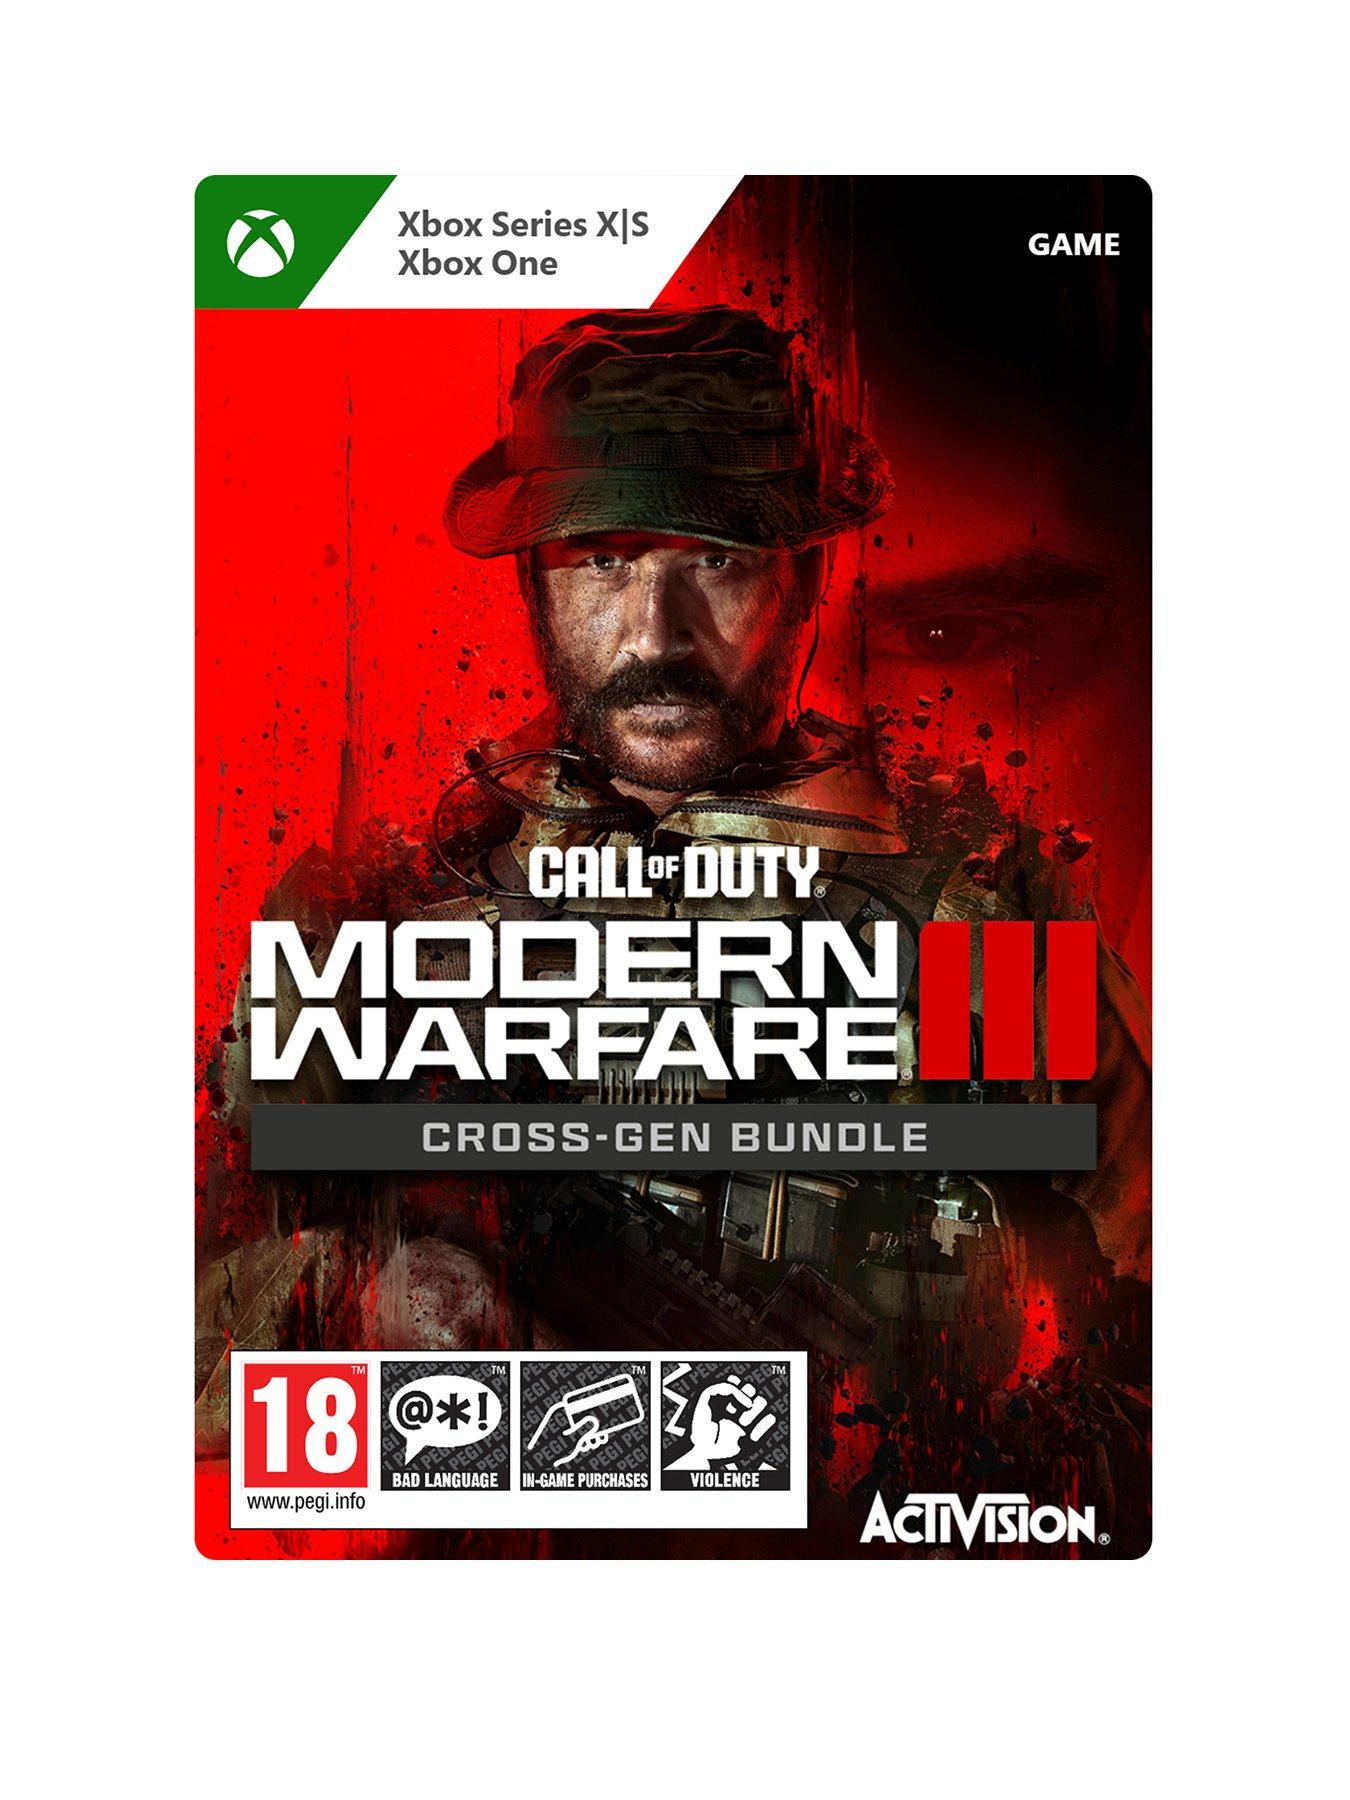 Forza Horizon 5 Xbox 360 Version Full Game Setup Free Download - Hut Mobile